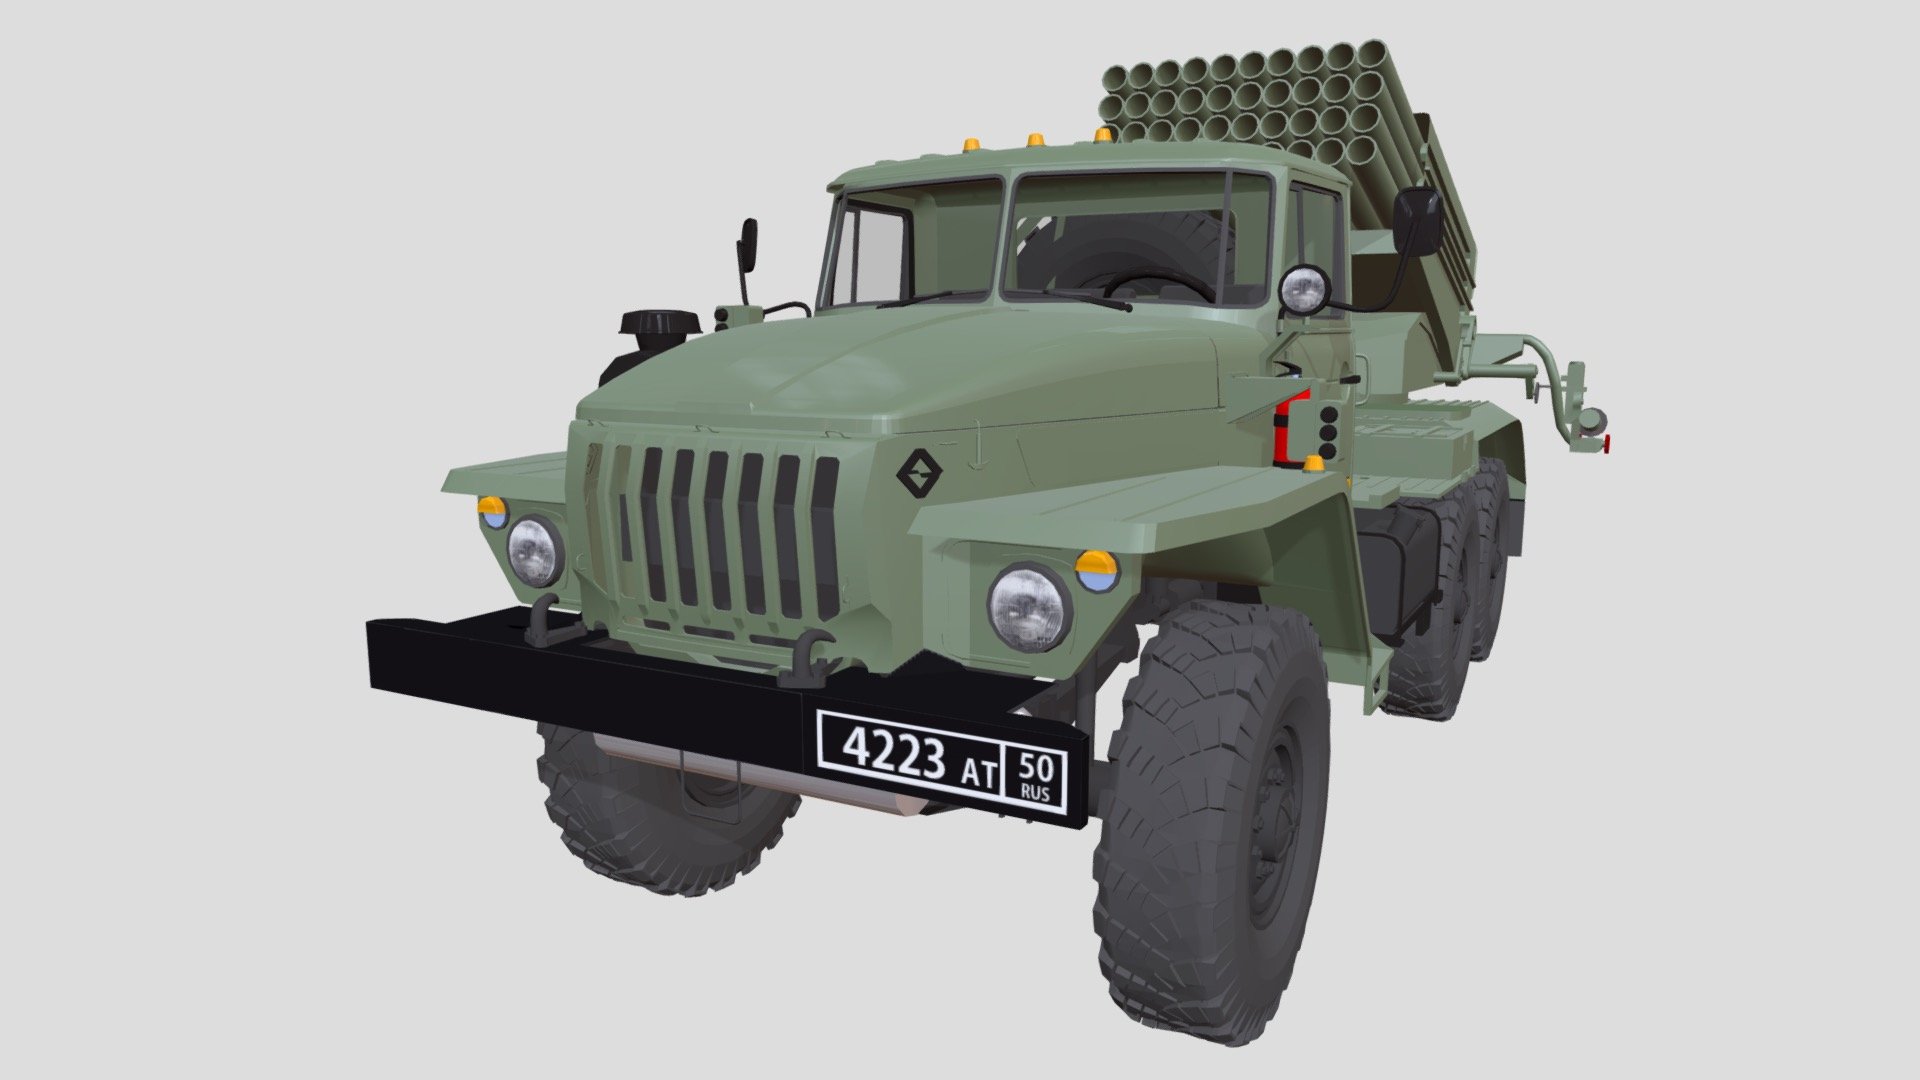 Russian BM-21 Grad Multiple rocket launcher

A military truck BM-21 was produced since 1978 based on the Ural 4320 truck.

俄羅斯冰雹式多管火箭彈發射車，參考國外Ural 4320 底盤後，最先製作完成的車輛，後來才再陸續新增其他款式的車輛，成為一個系列。 - БМ-21 "Град" ( BM-21 Grad ) - 3D model by Basic Hsu (@Hsu.Pei.Ge) 3d model